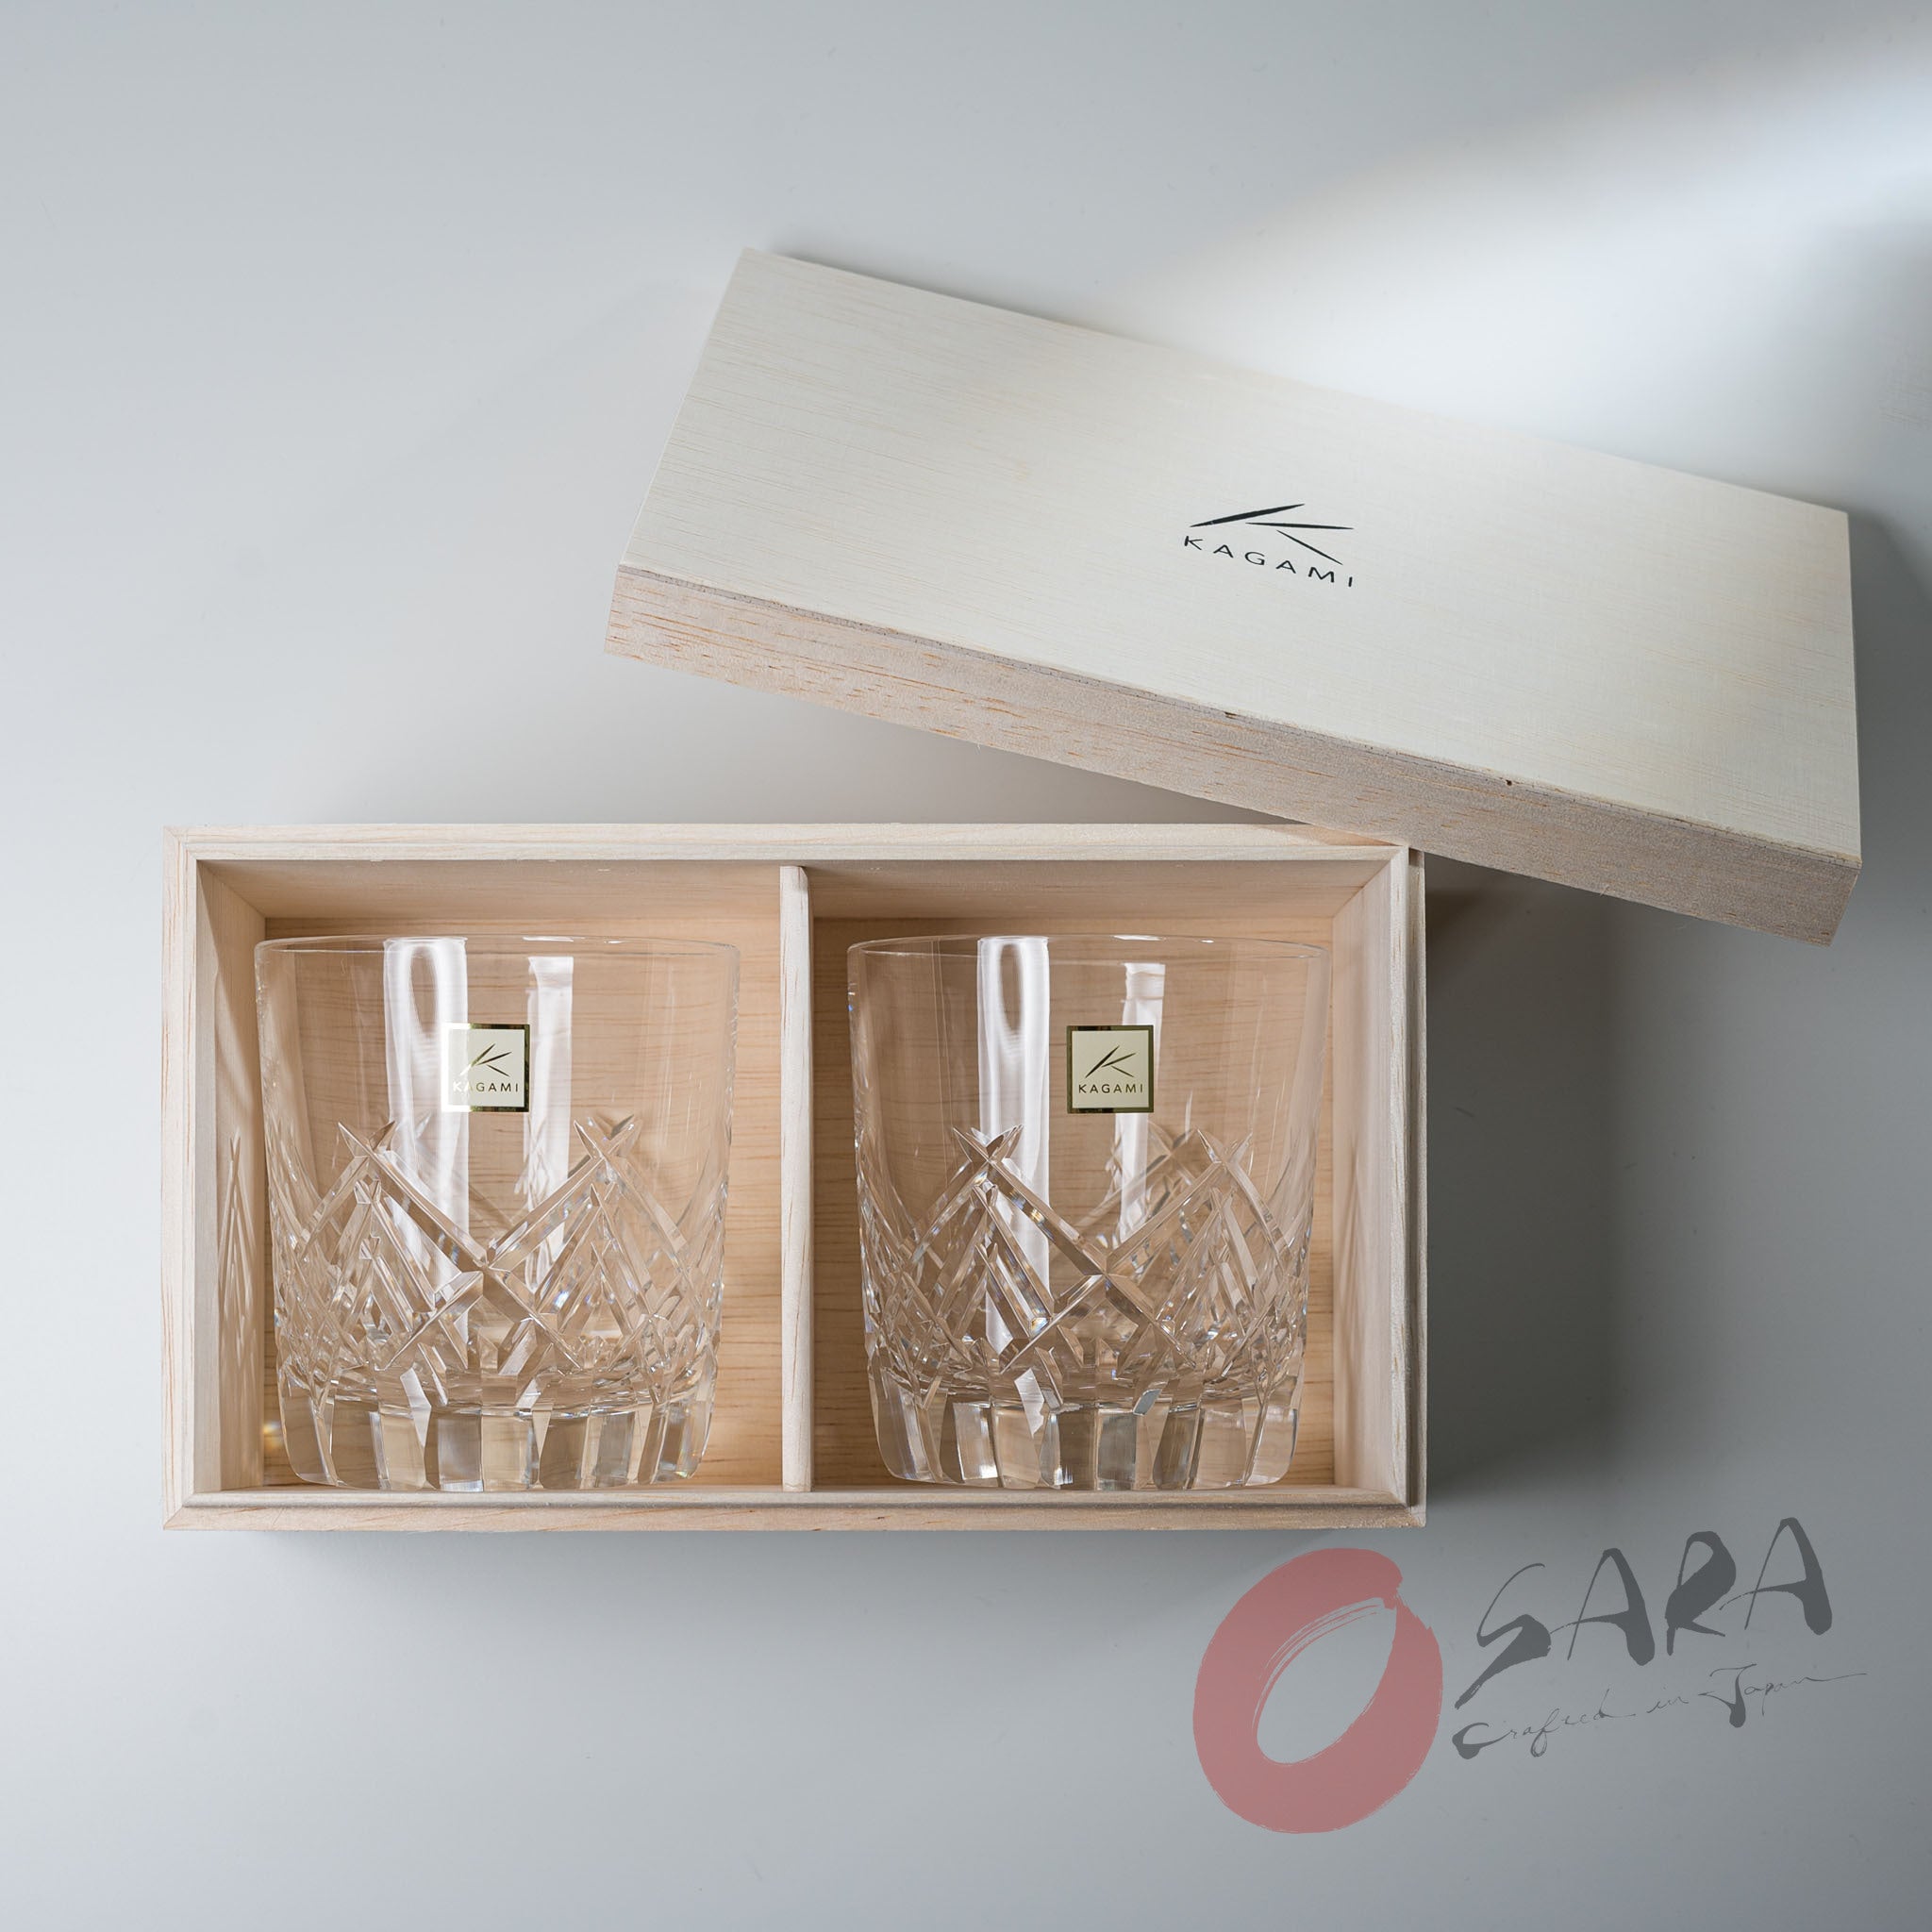 KAGAMI Crystal Japanese Handmade Pair Rock Glass - 260ml - Sleet